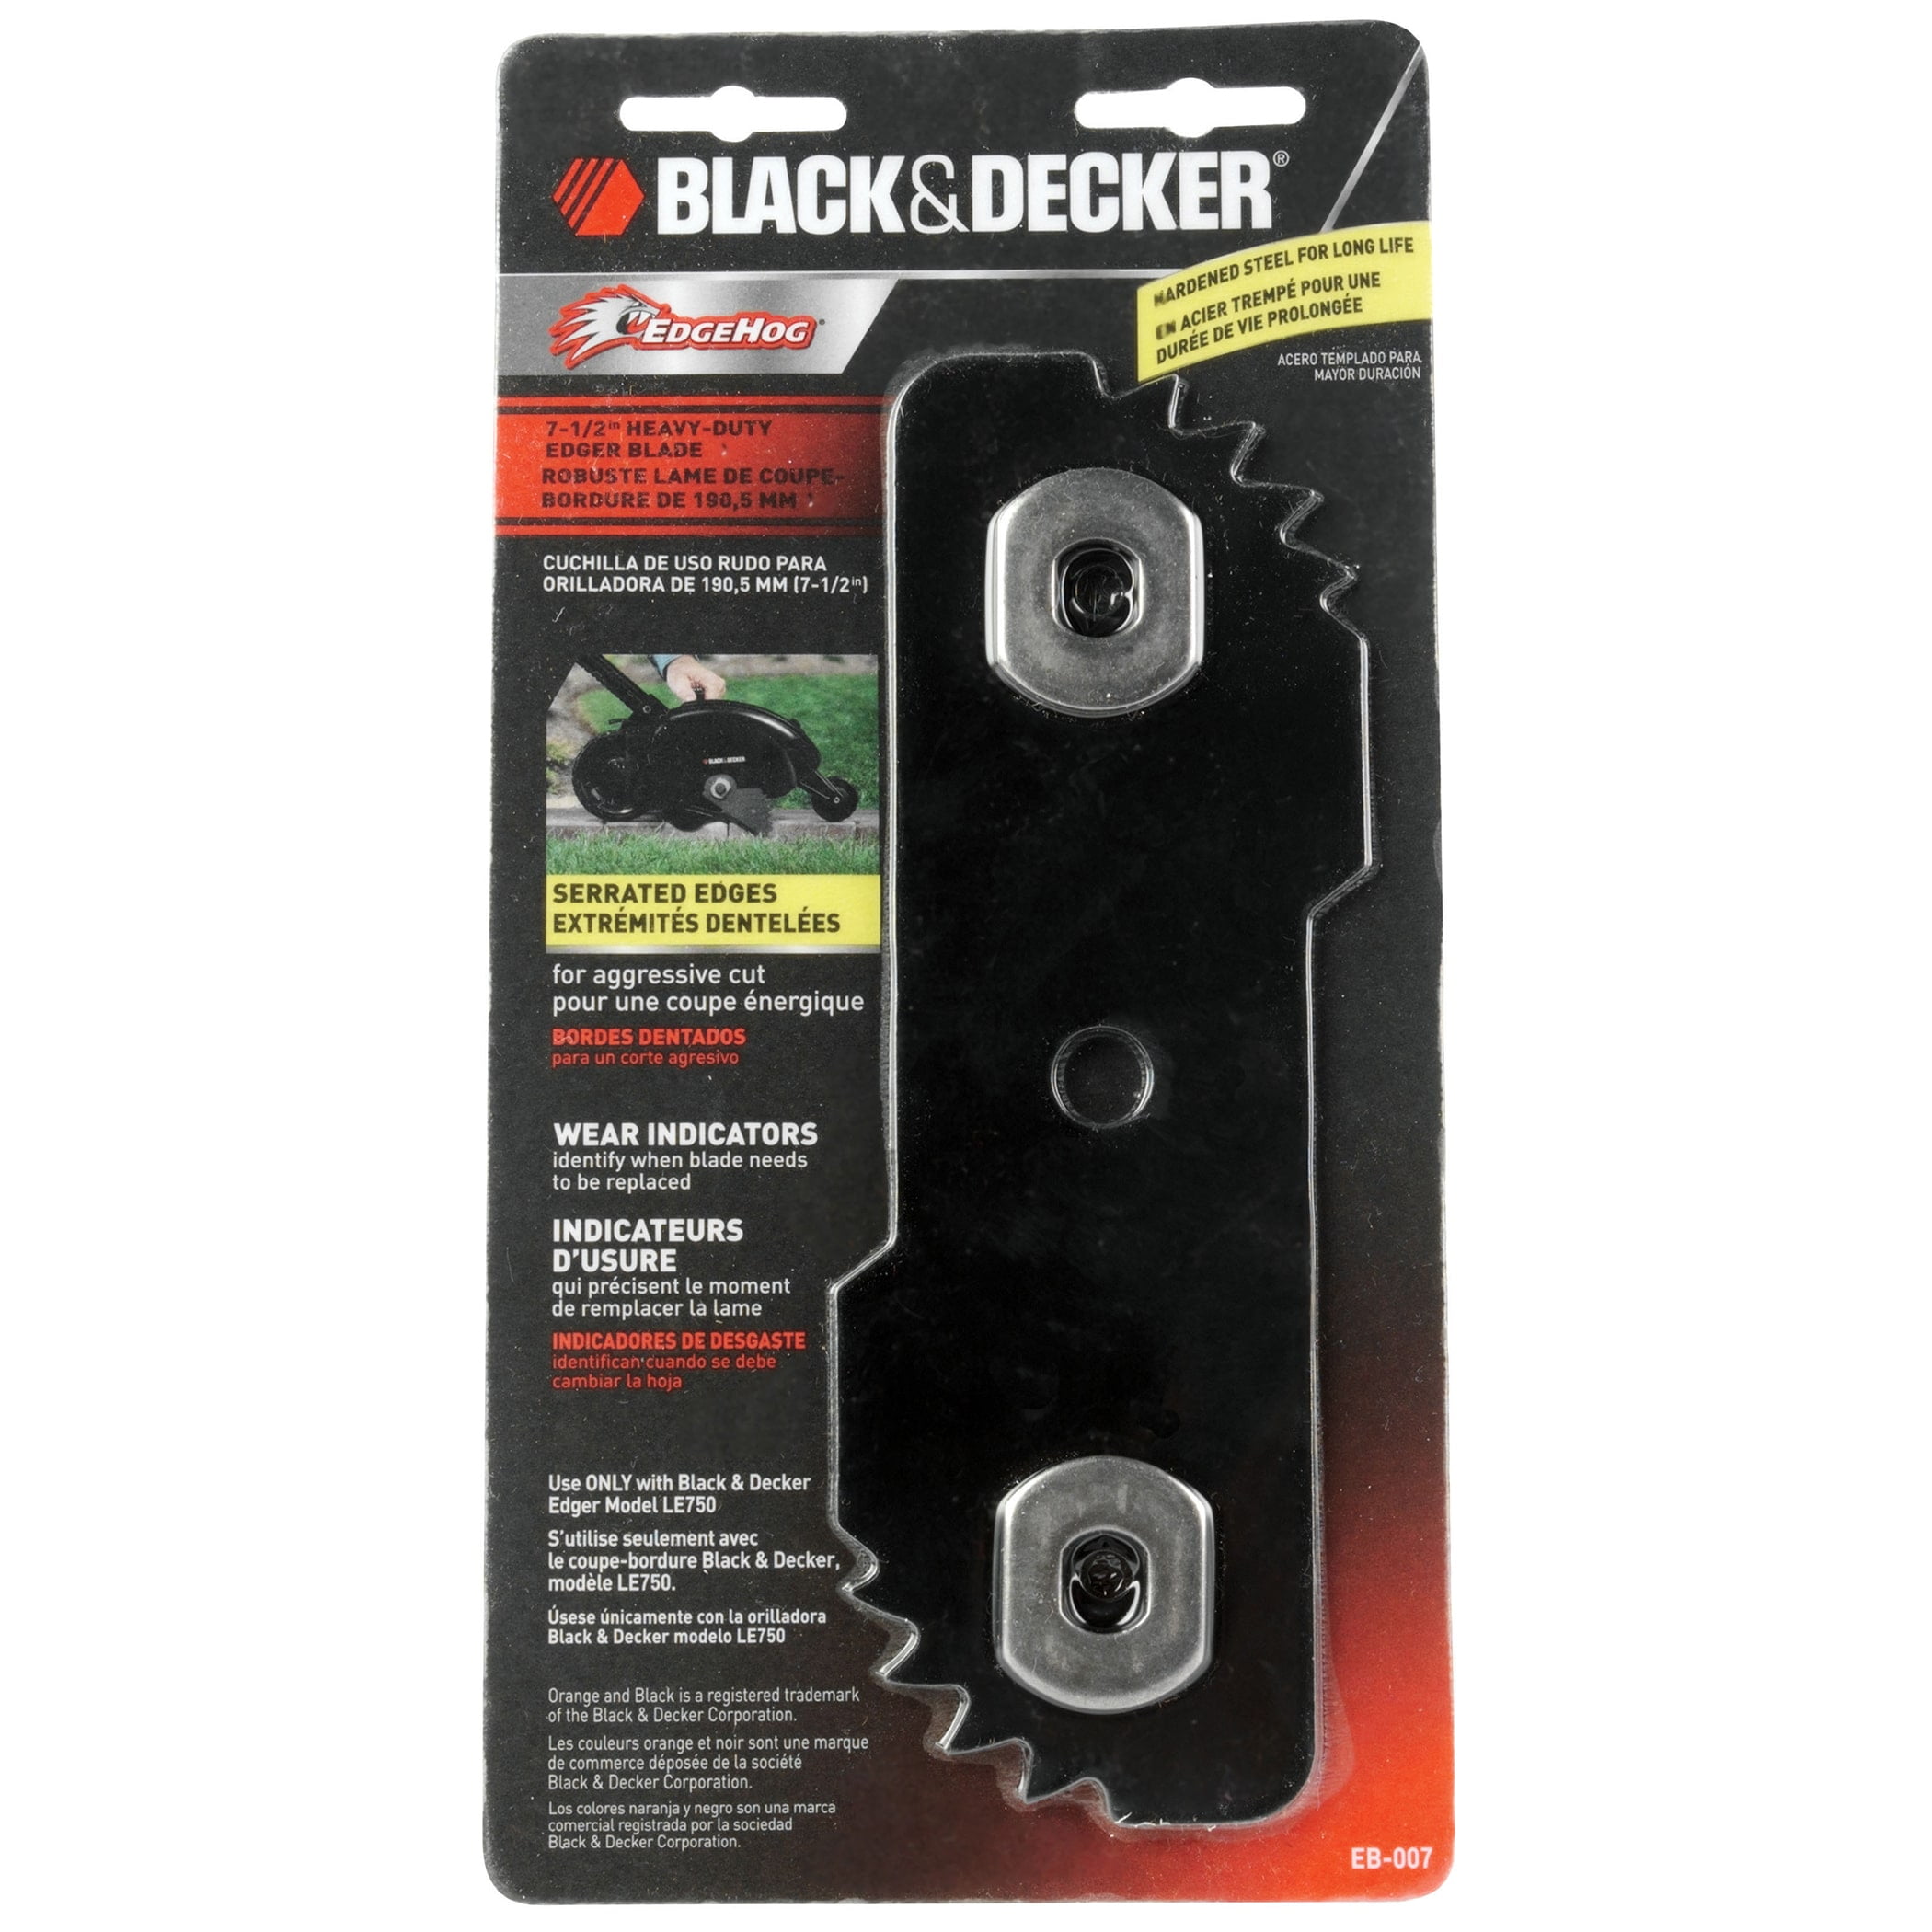 Black & Decker 7-1/2 Heavy Duty Edger Blade EB-024 (1 blade) 28872002403